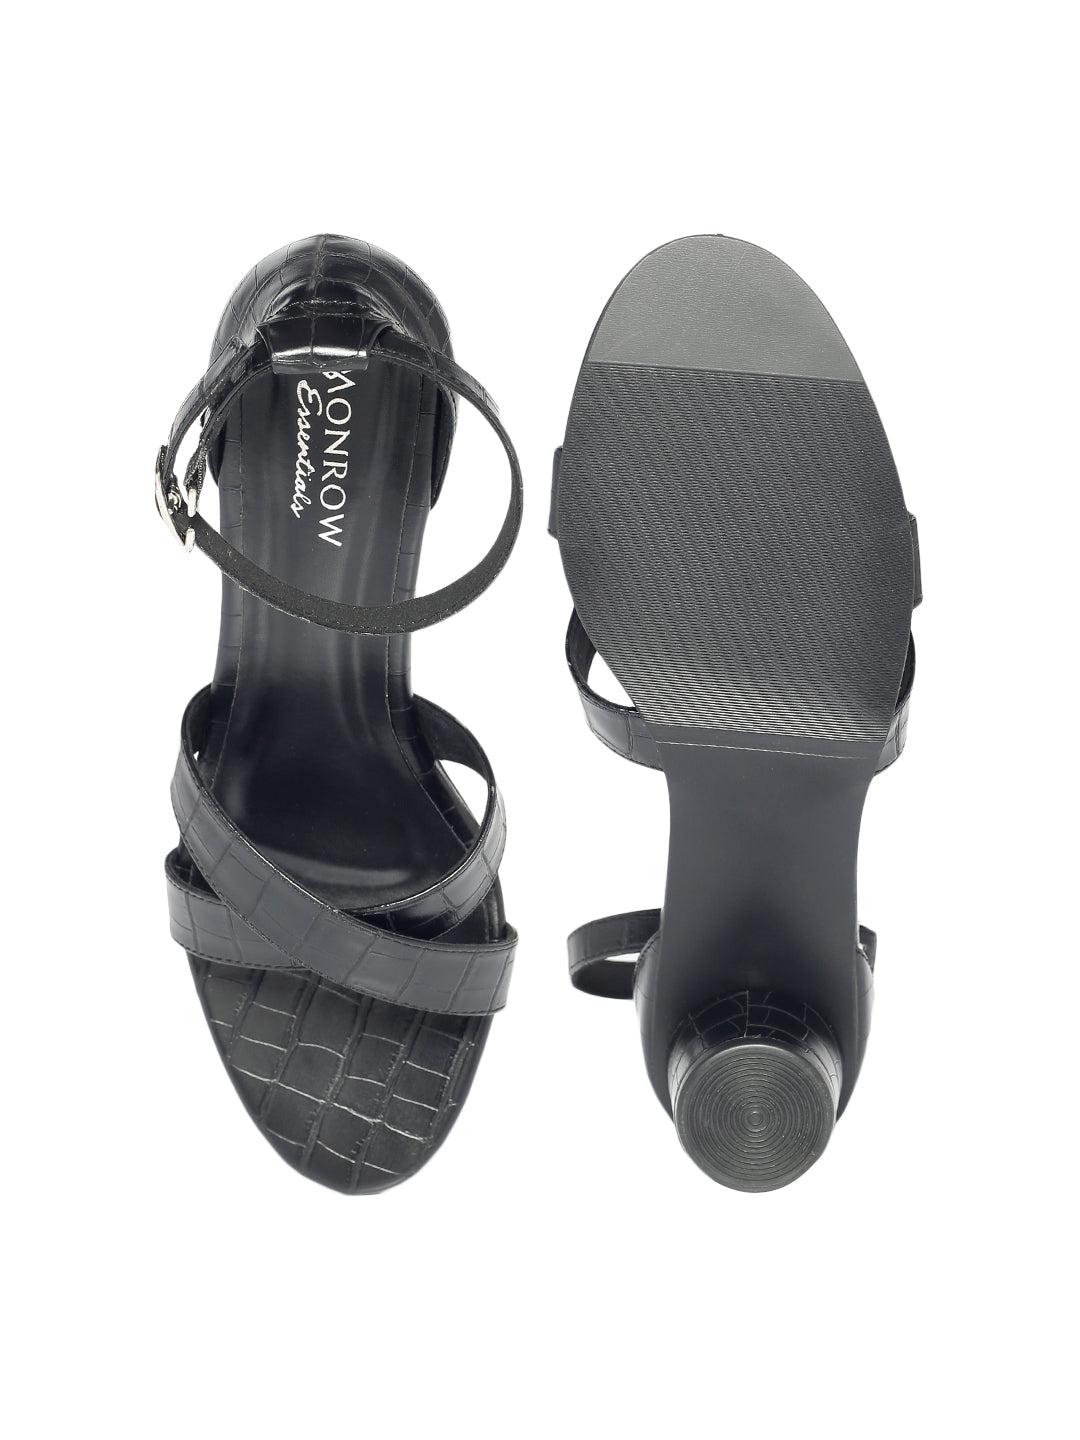 Khadim Black Pump Heels Formal Shoe for Women